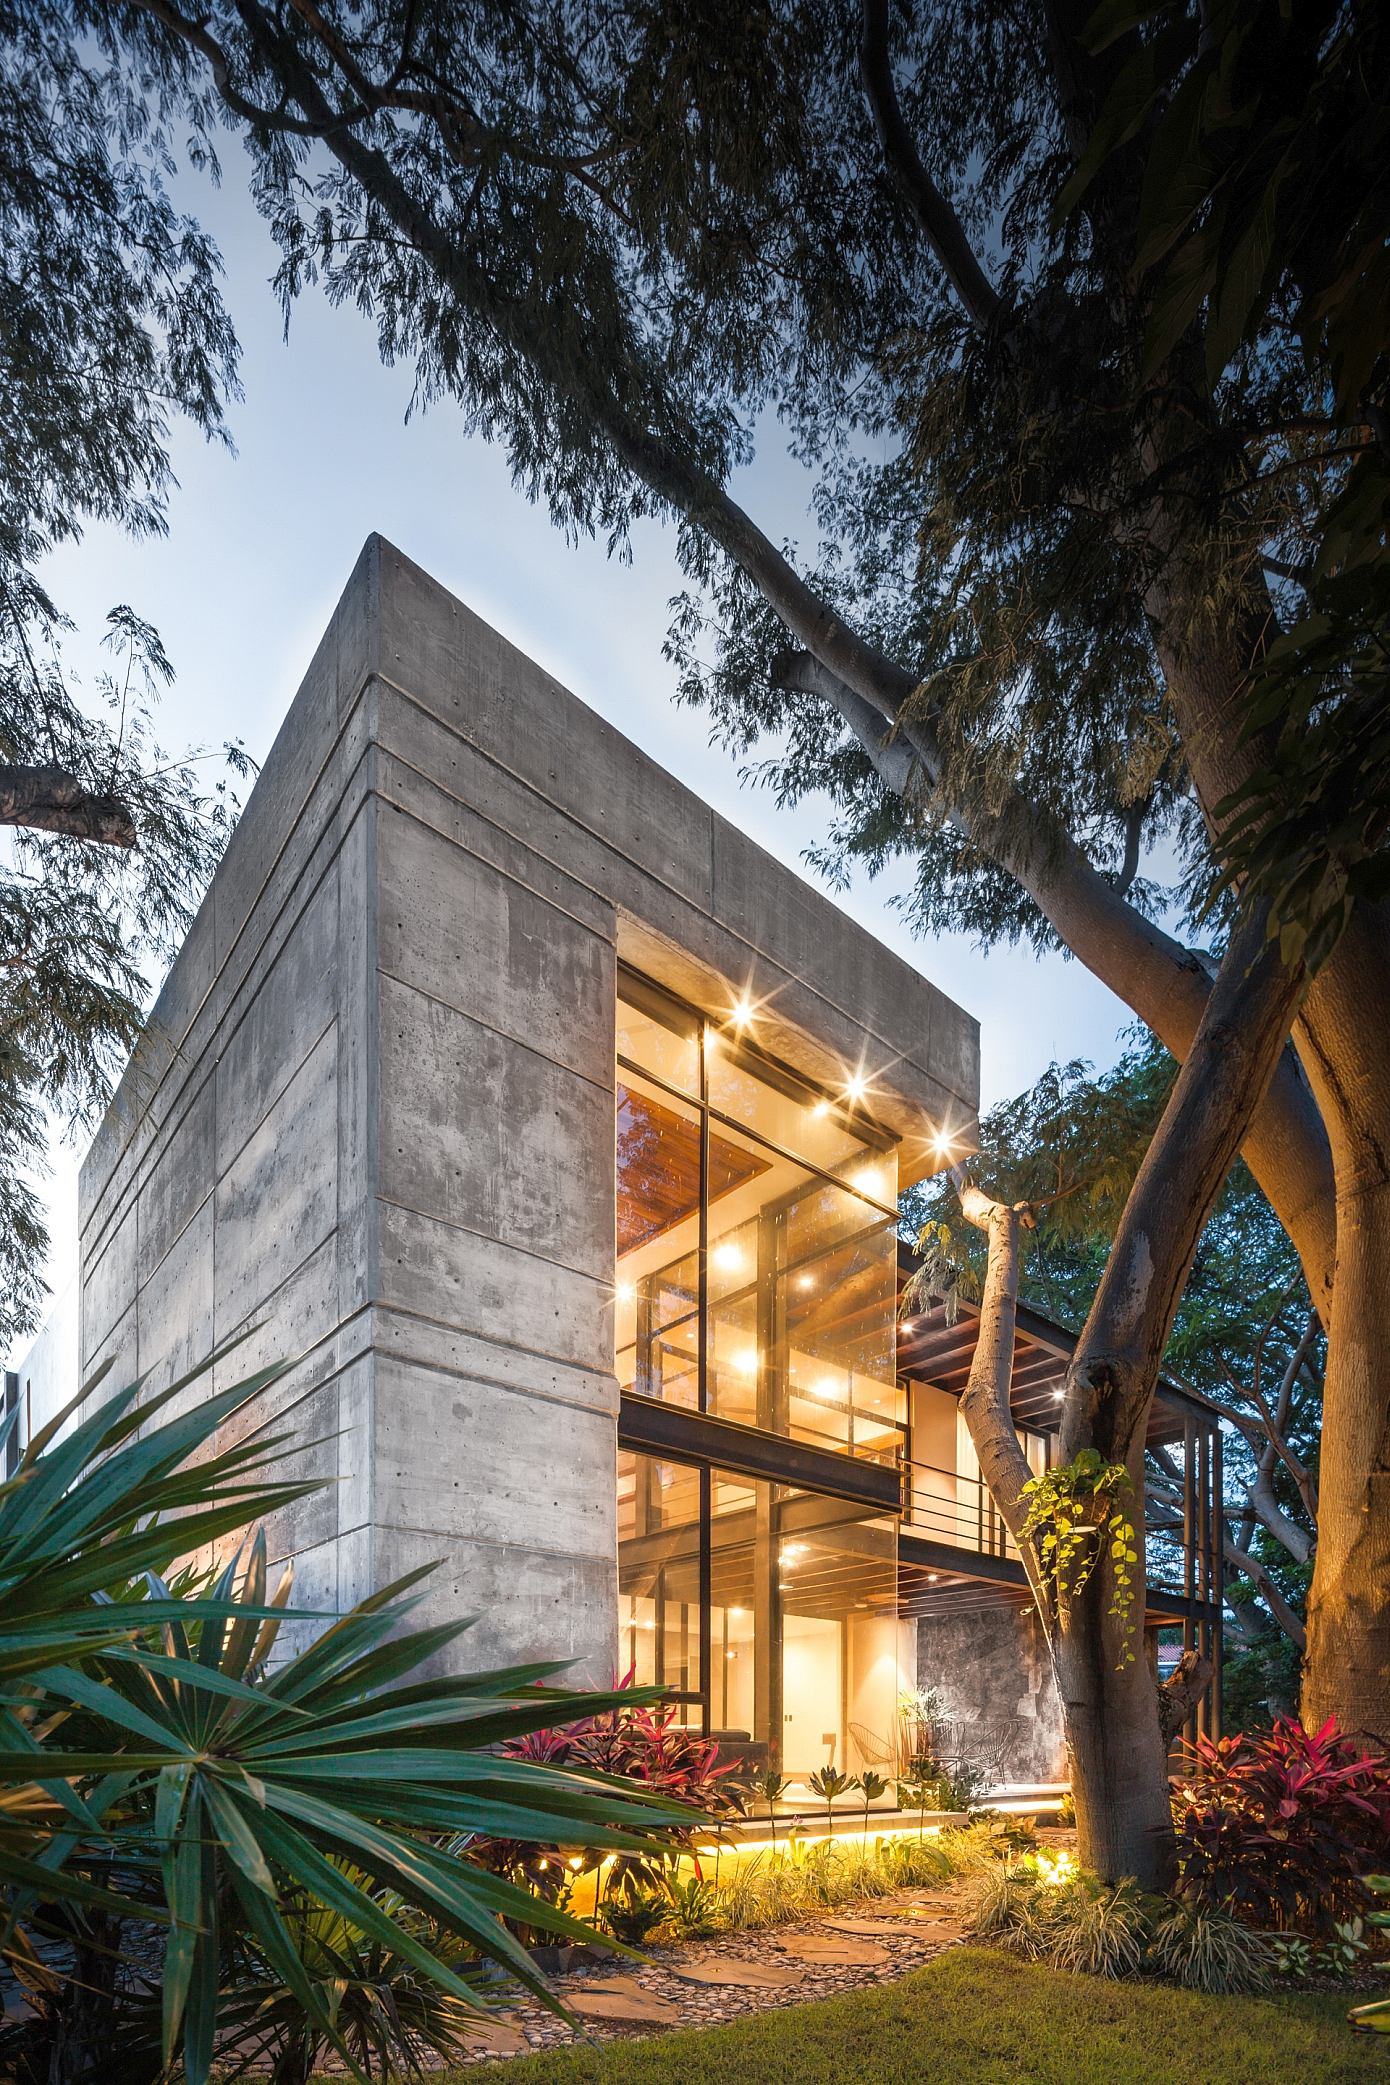 Casa Hilca by Di Frenna Arquitectos